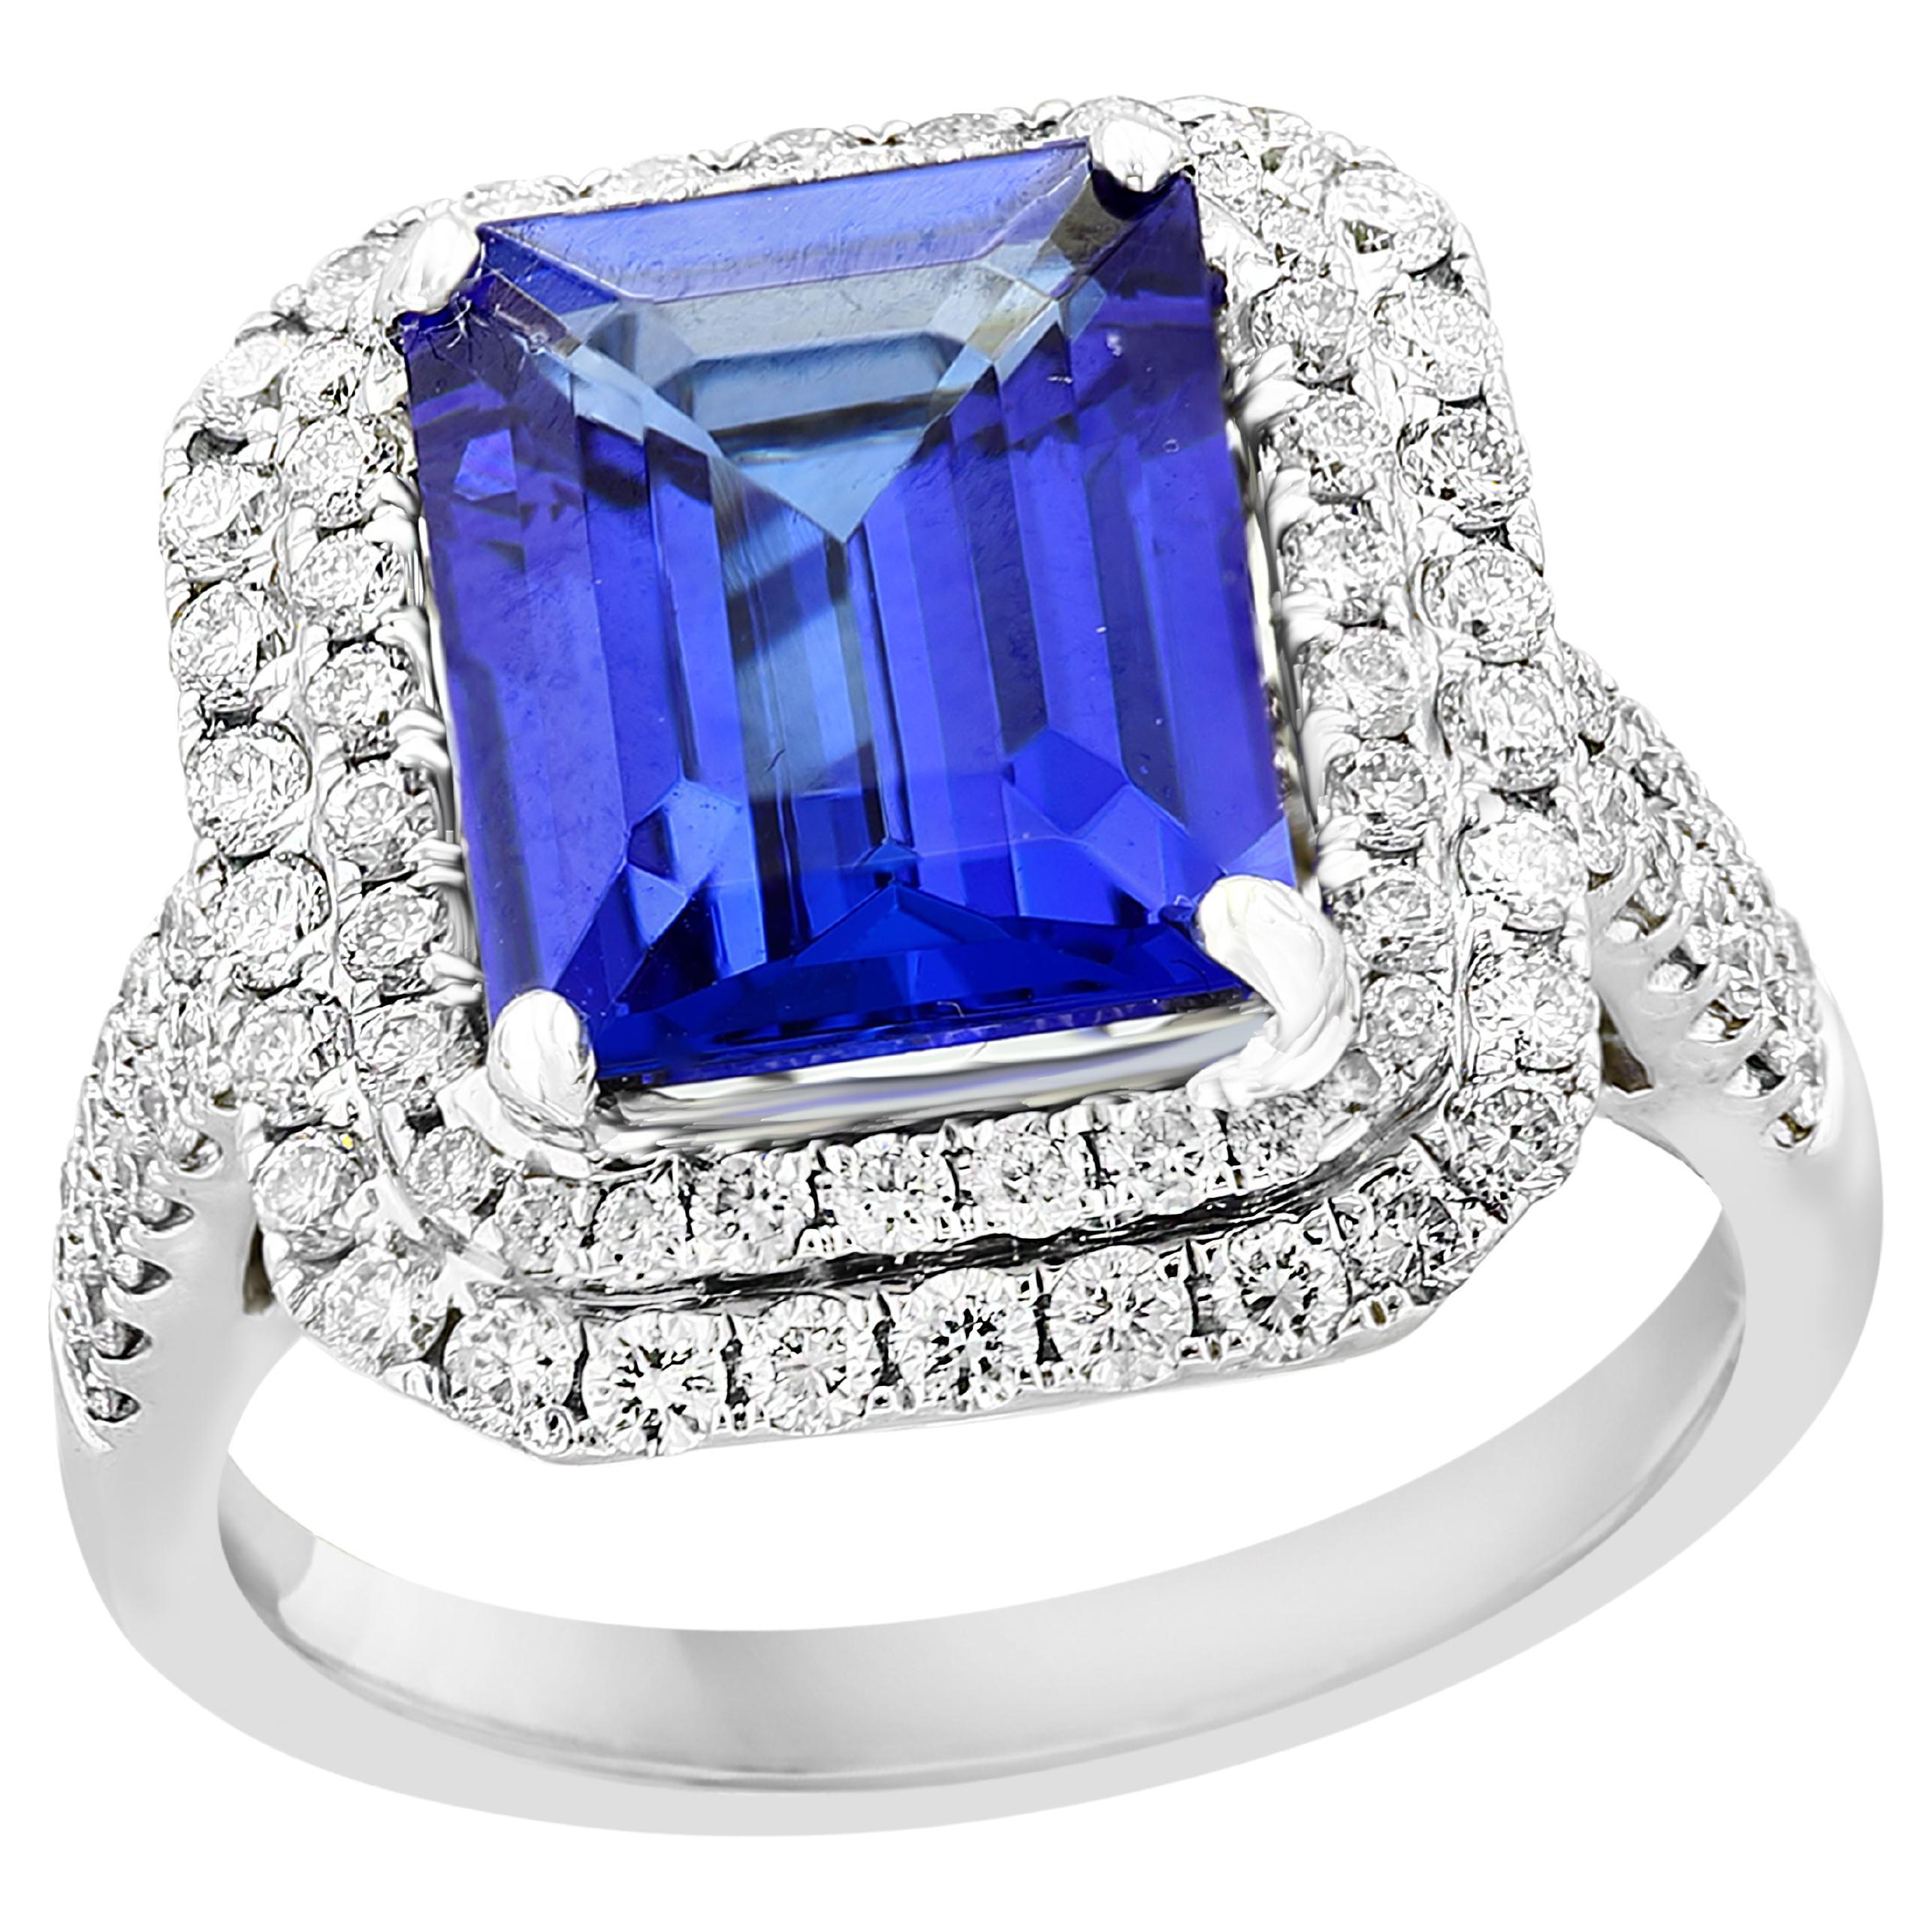 4.32 Carat Emerald Cut Tanzanite Diamond Ring in 18K White Gold For Sale